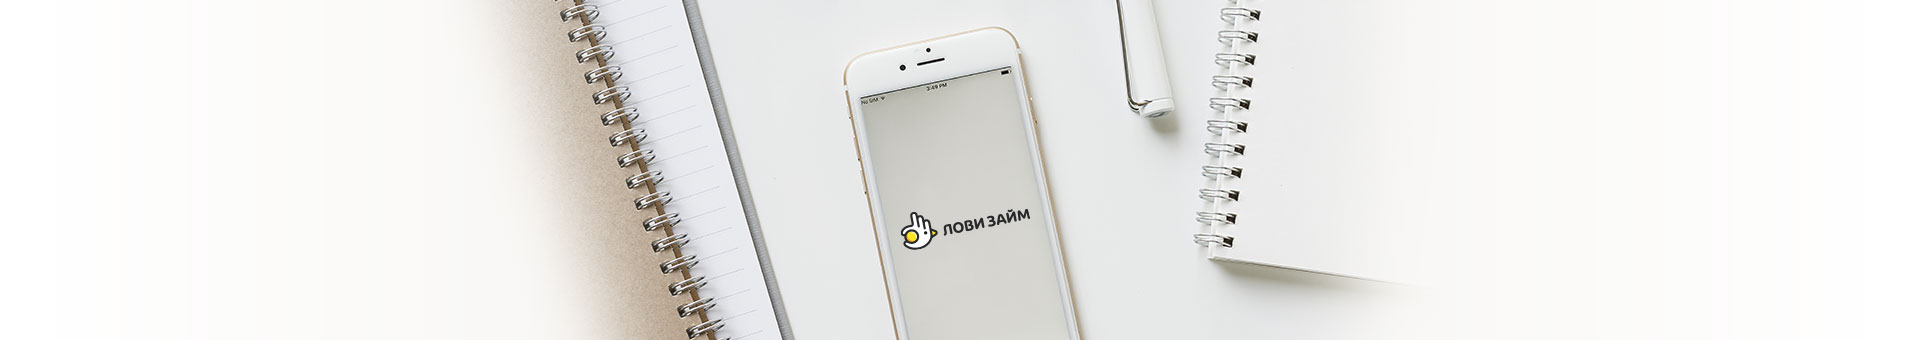 год займ телефон homecredit ru остаток по кредиту